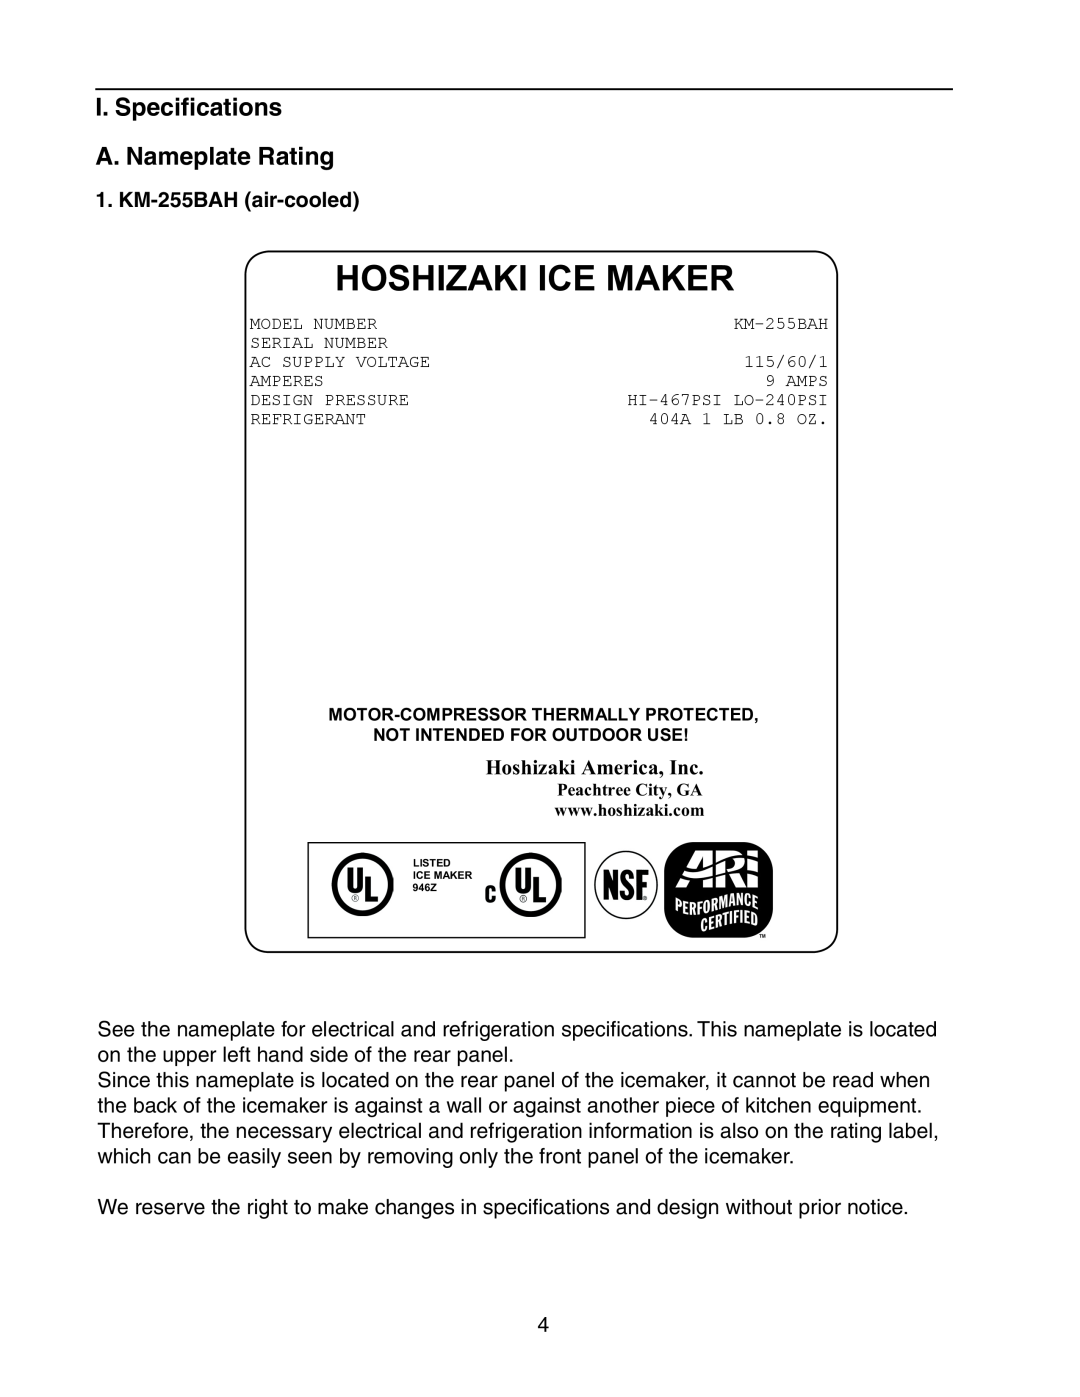 Hoshizaki KM-255BWH instruction manual I. Speciﬁcations A. Nameplate Rating, KM-255BAH air-cooled, Hoshizaki Ice Maker 